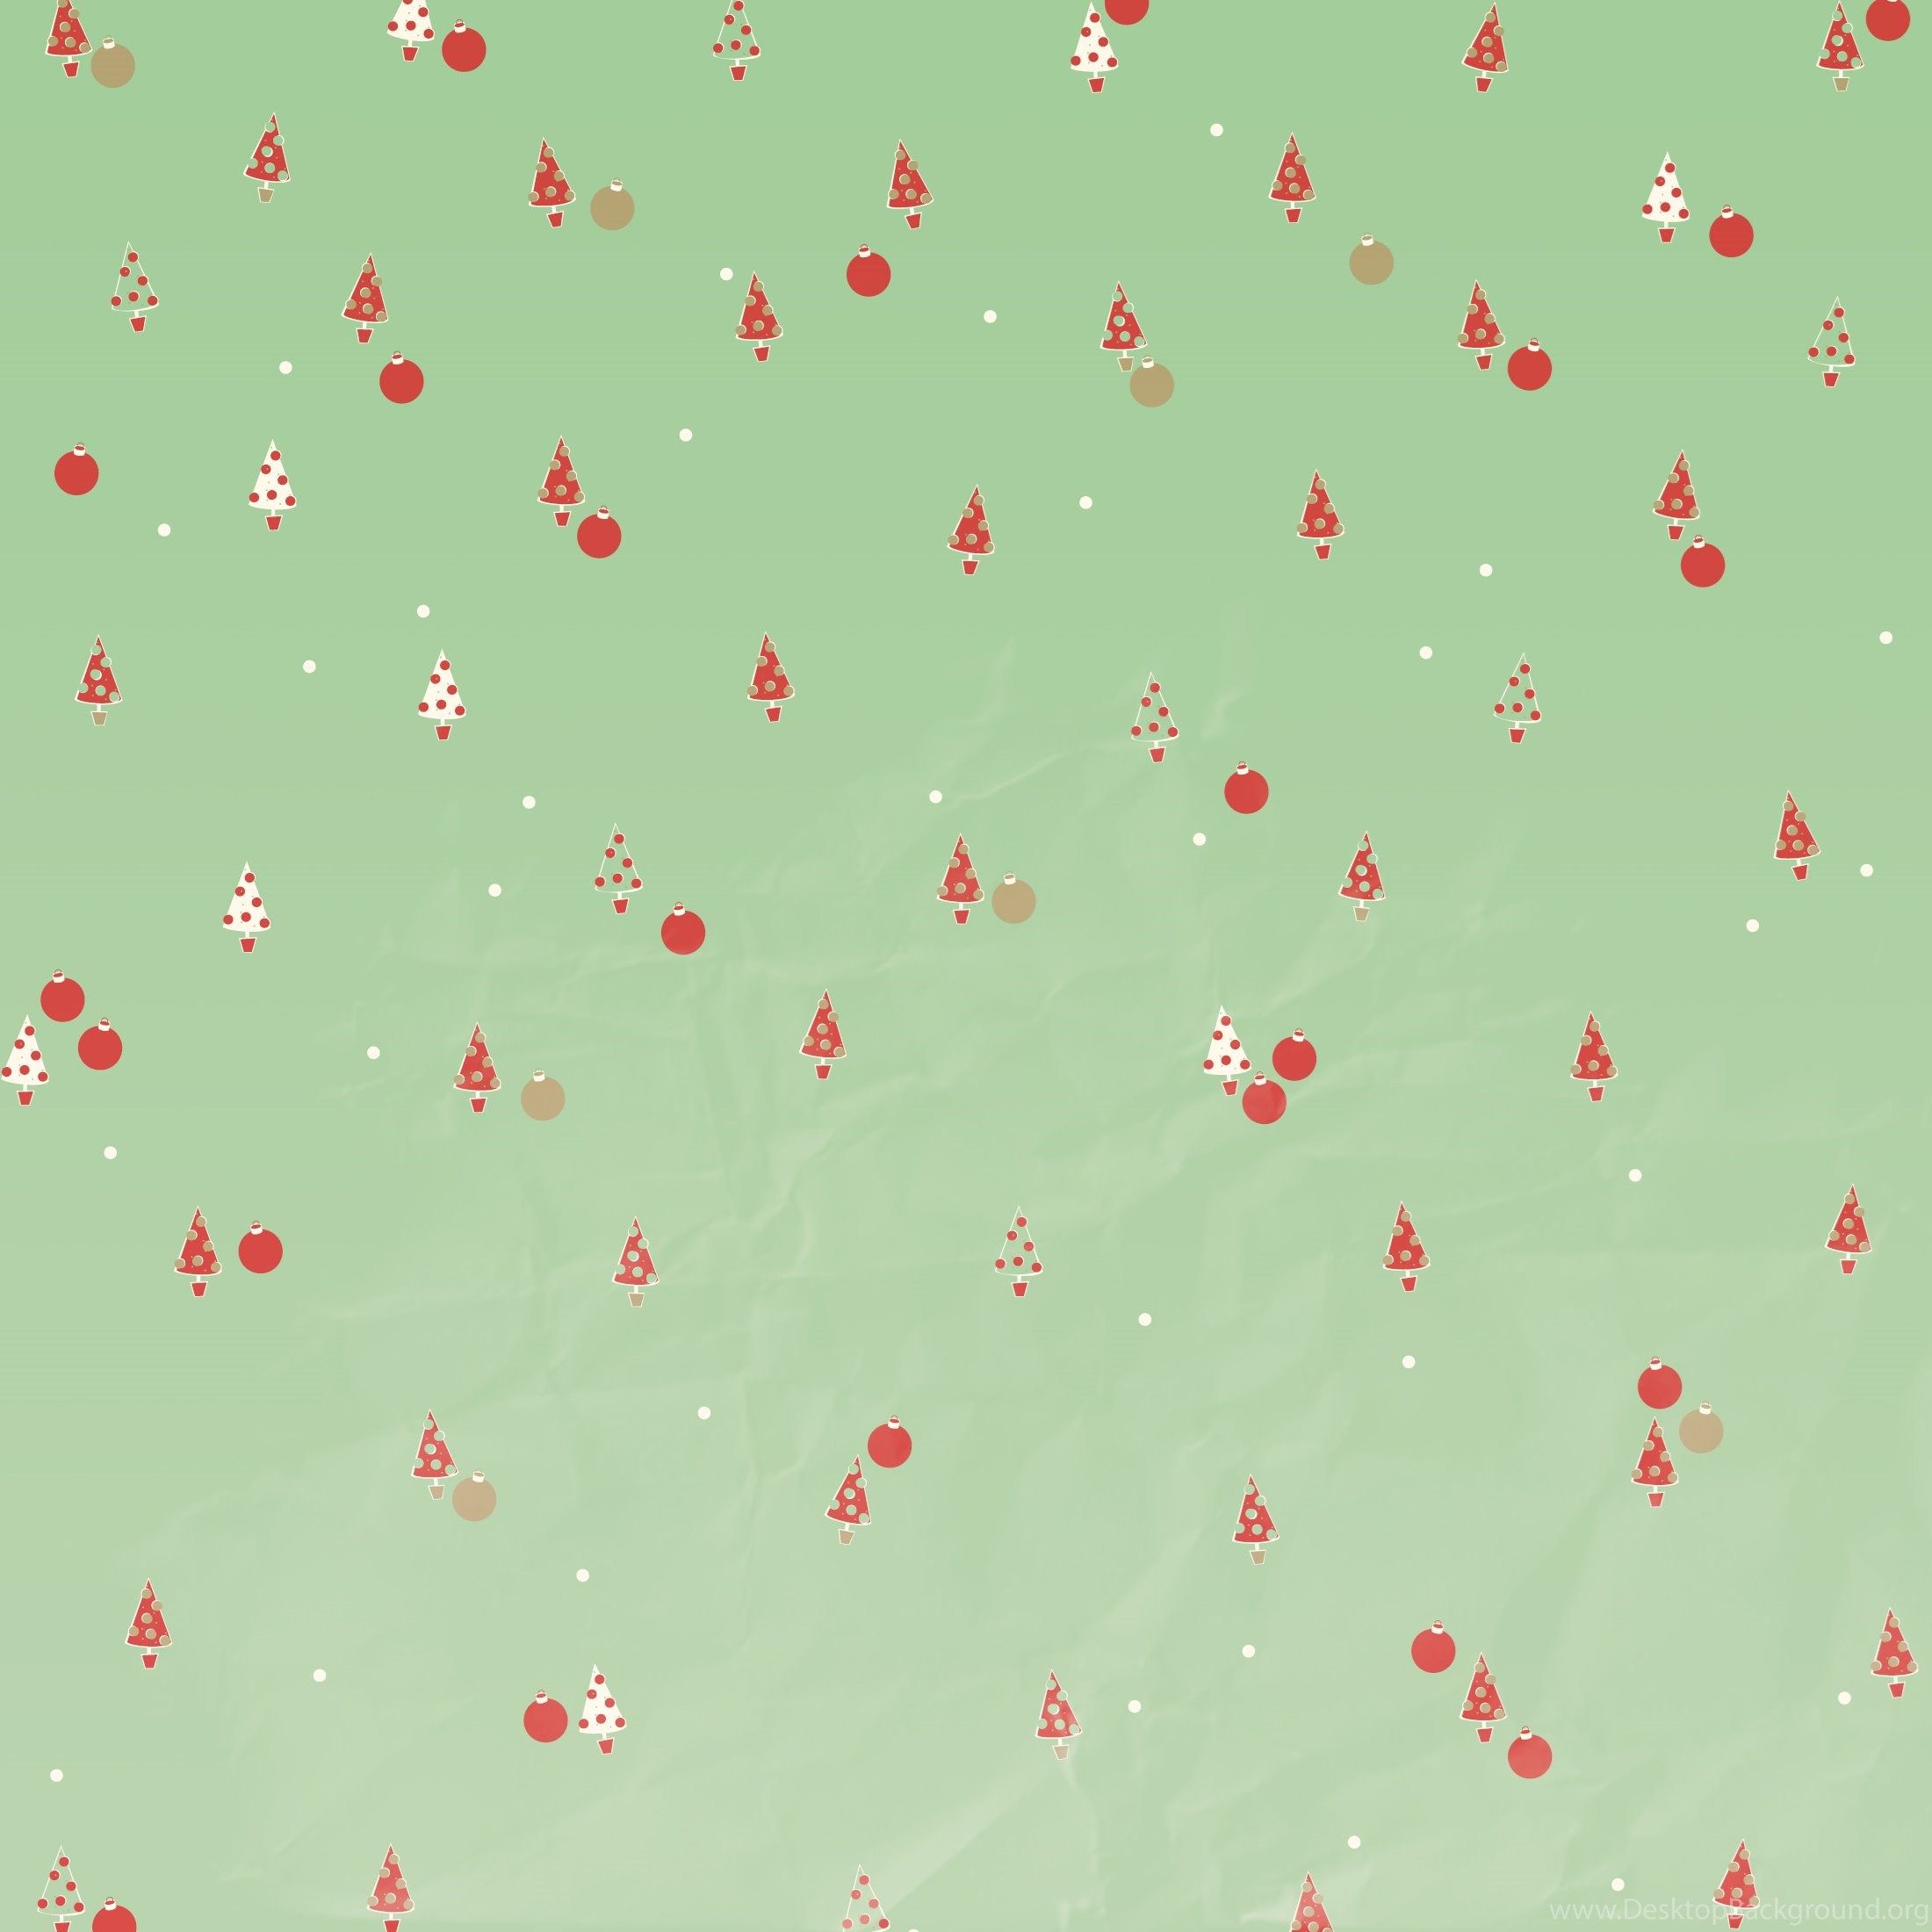 Cute Wallpaper Desktop Background Christmas Image